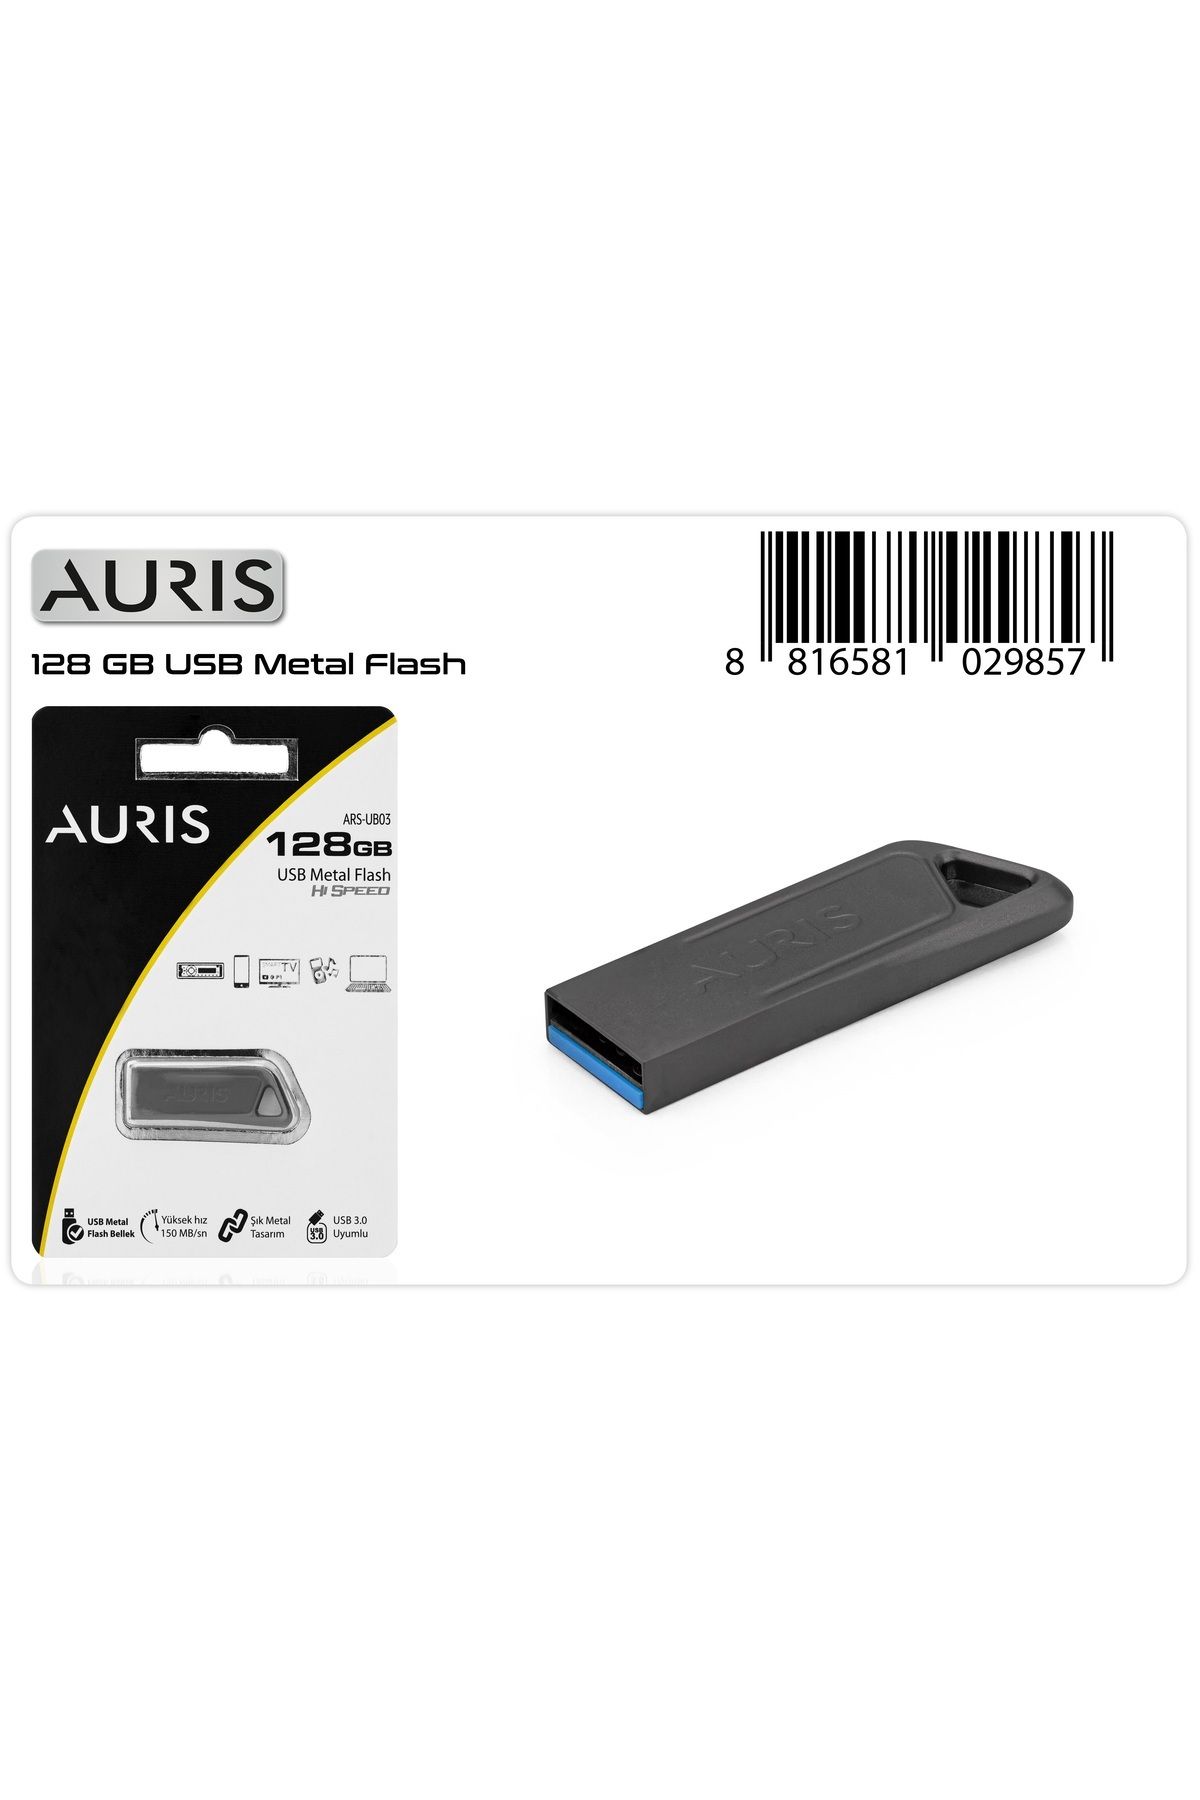 Auris Ars-ub03 128 Gb Usb Metal Flash Bellek